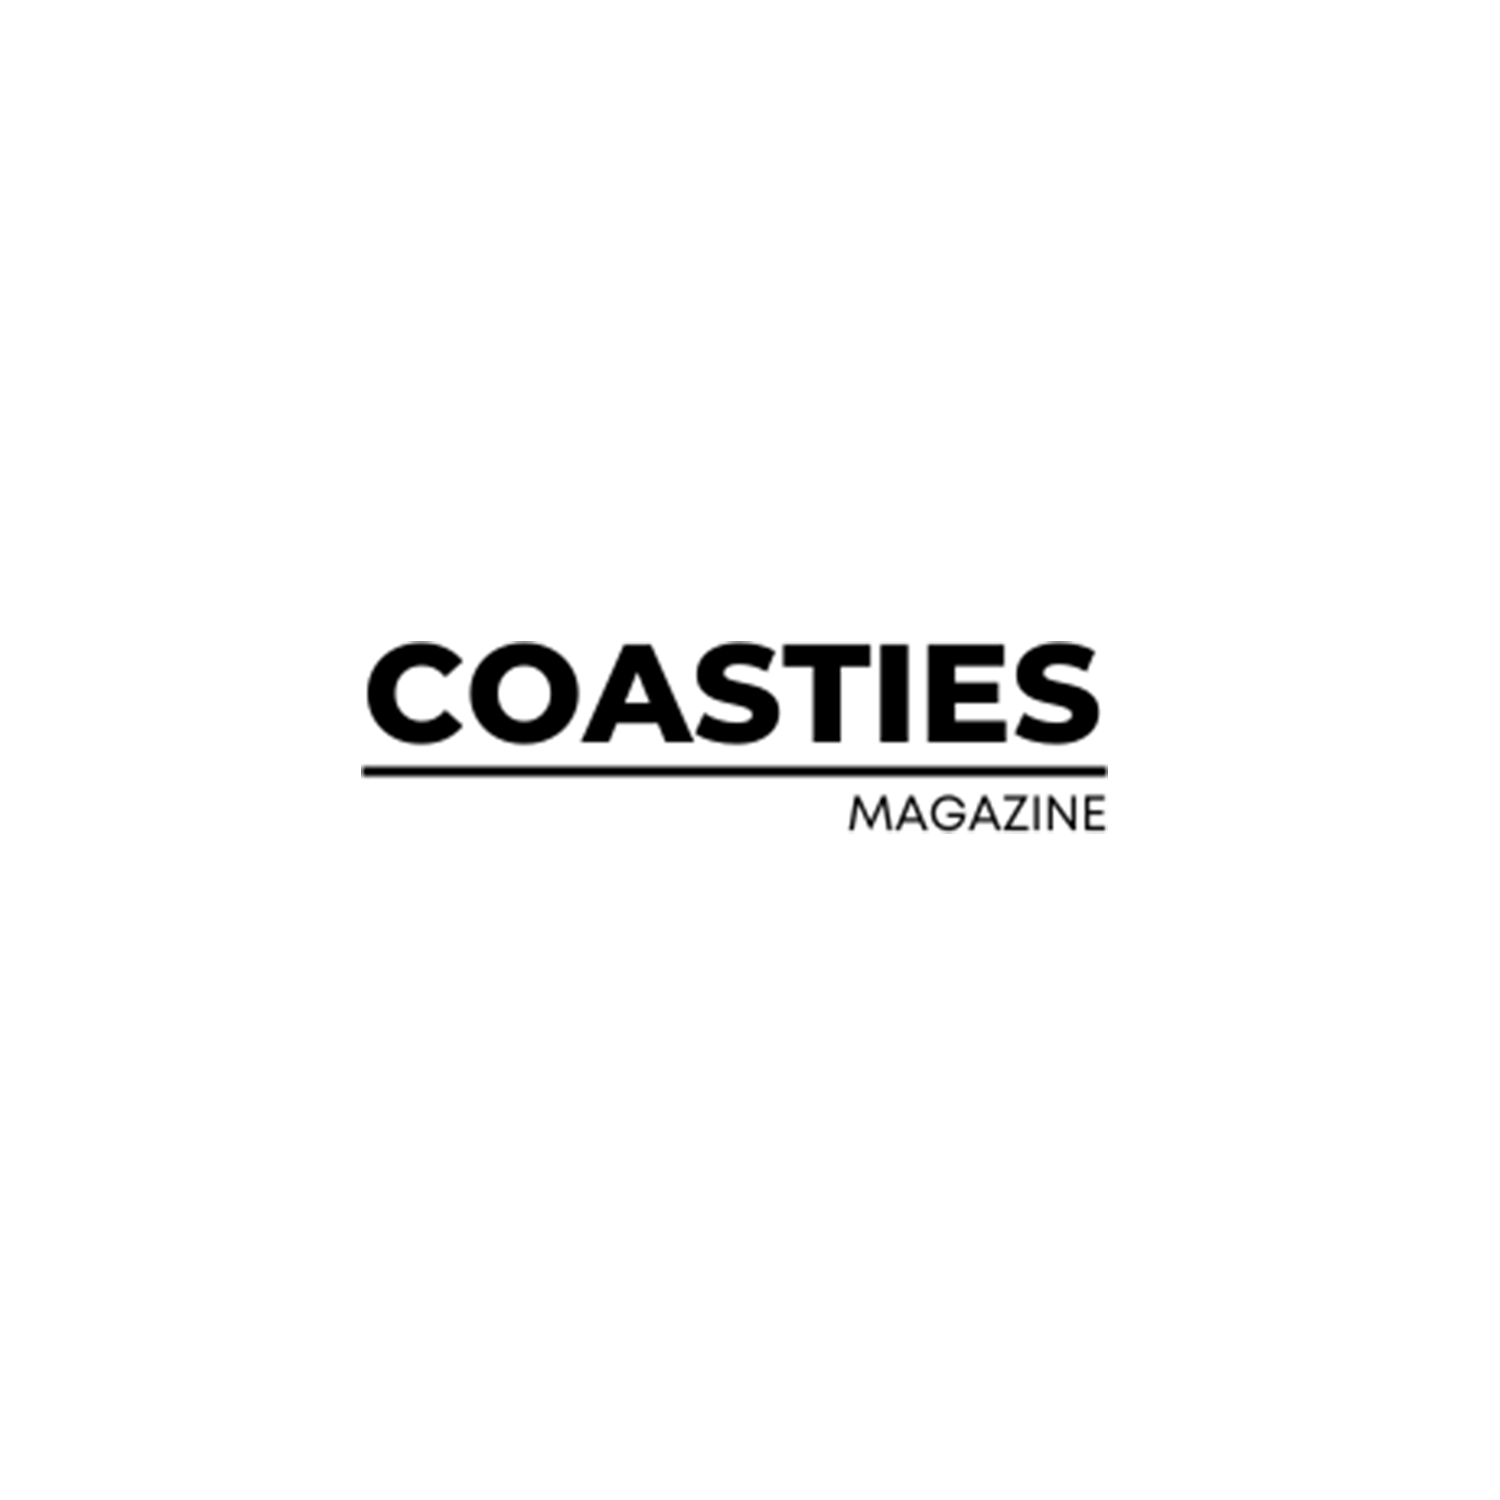 Coasties